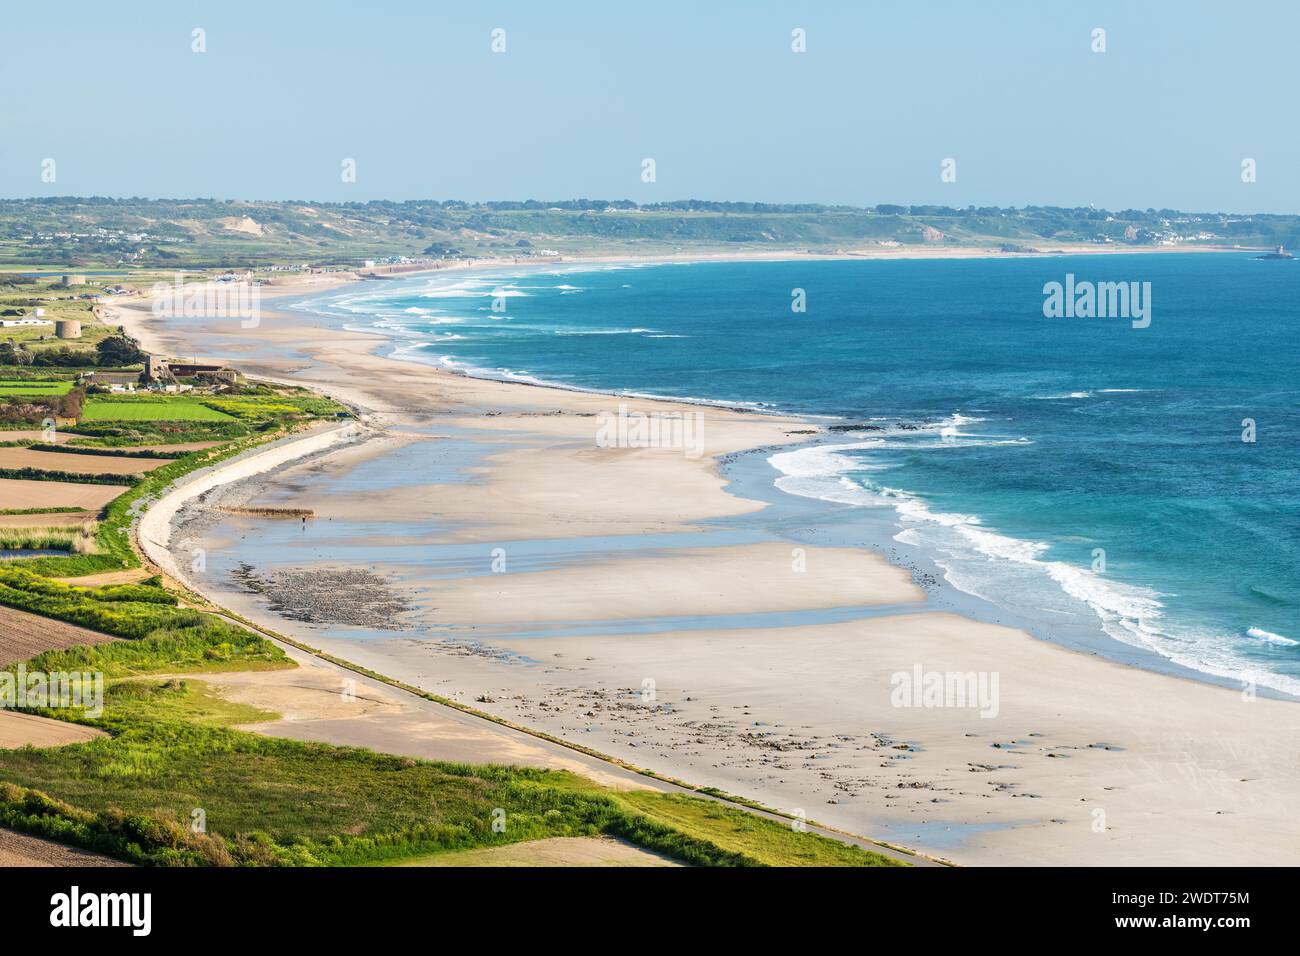 St. Ouens Bay beach, Jersey, Channel Islands, Europe Stock Photo